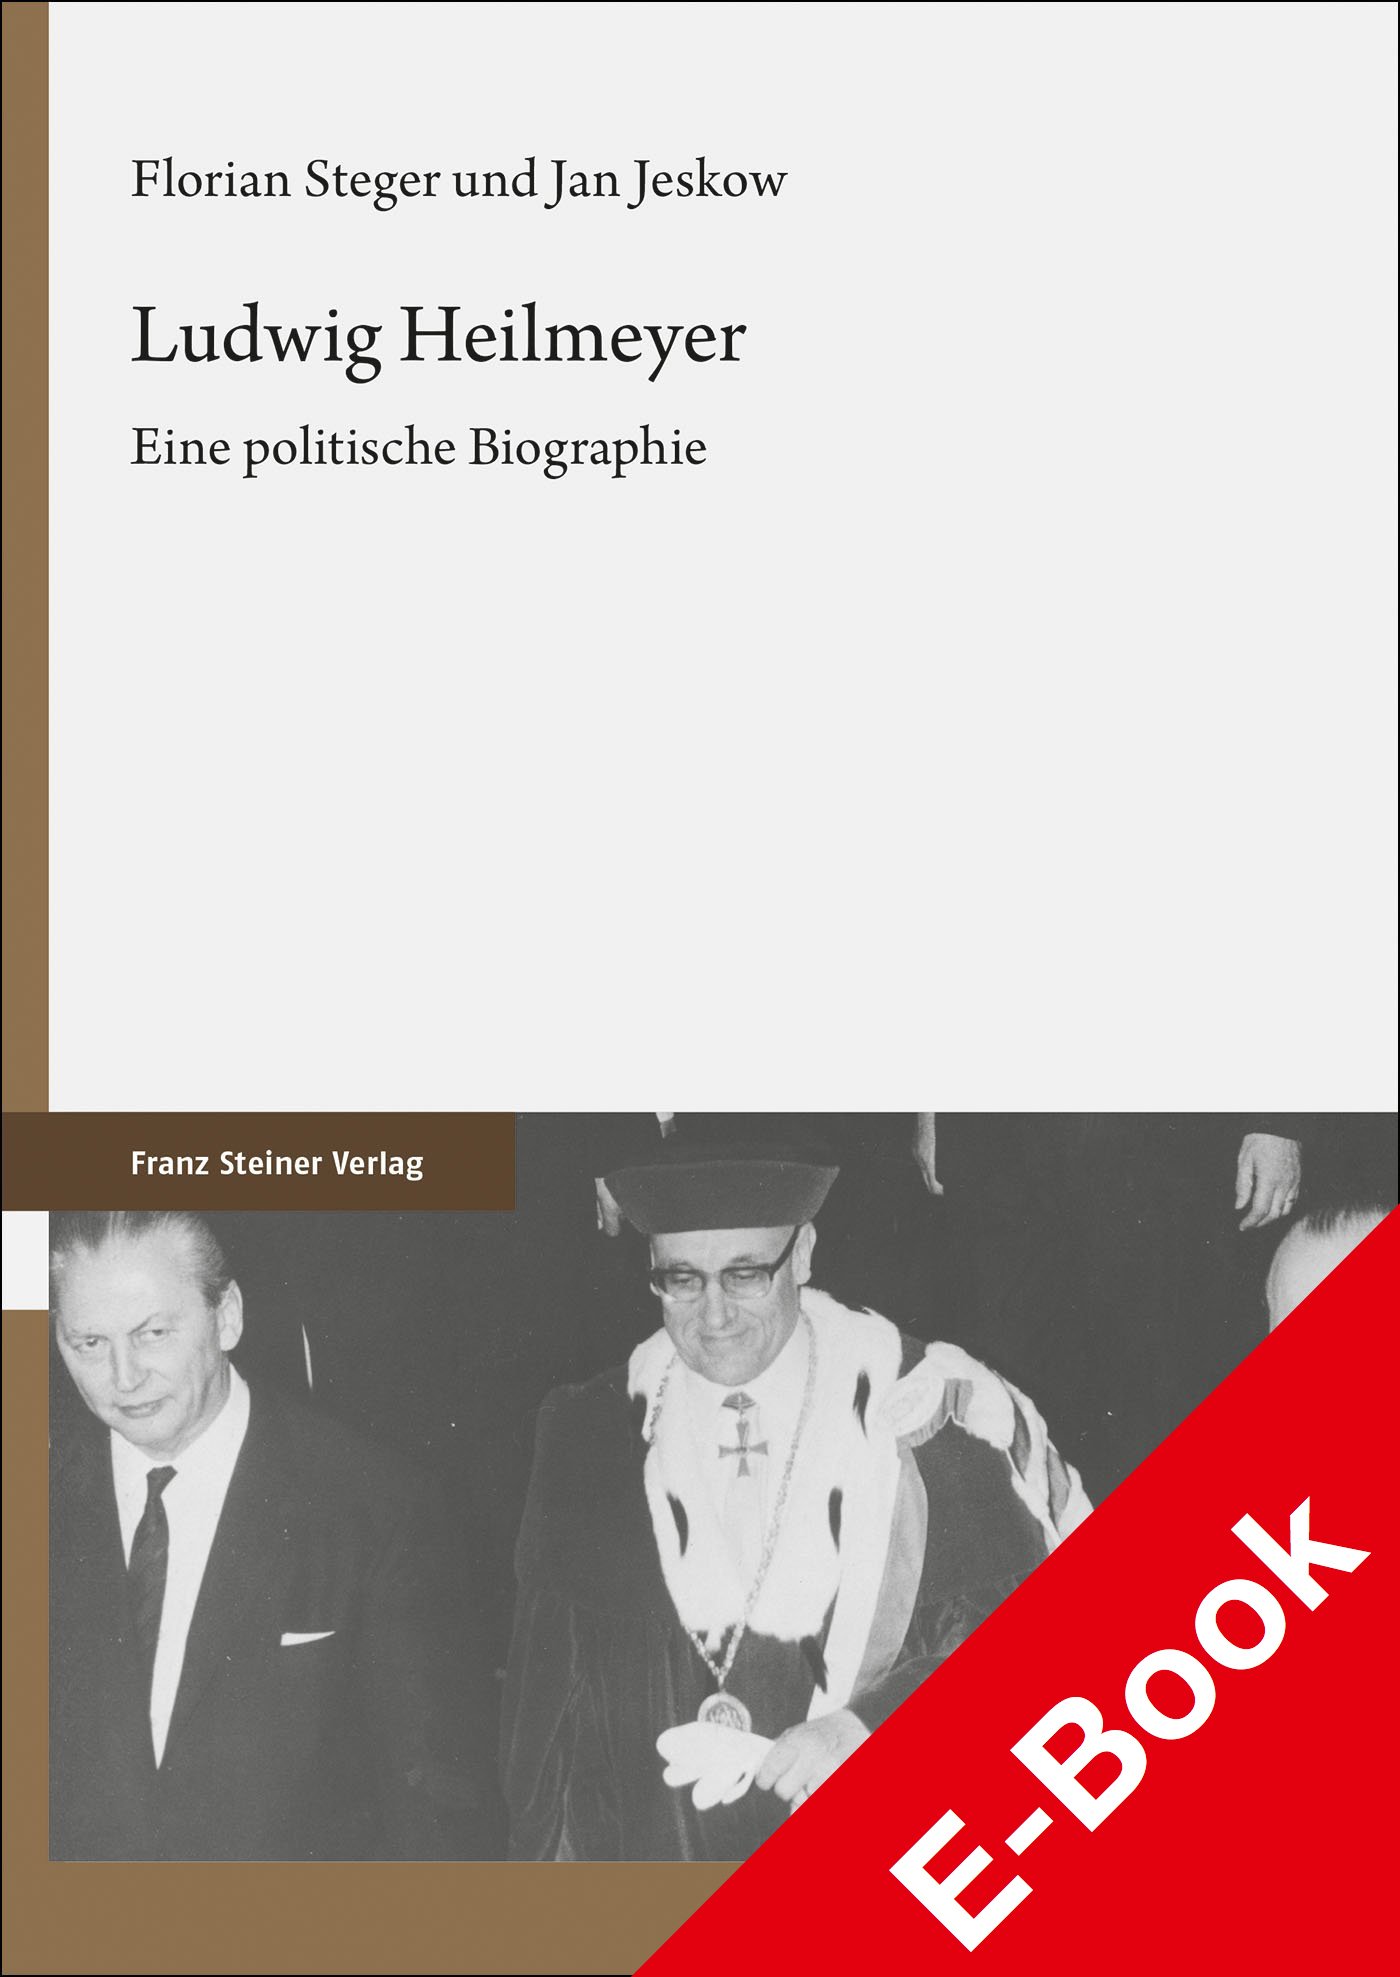 Ludwig Heilmeyer